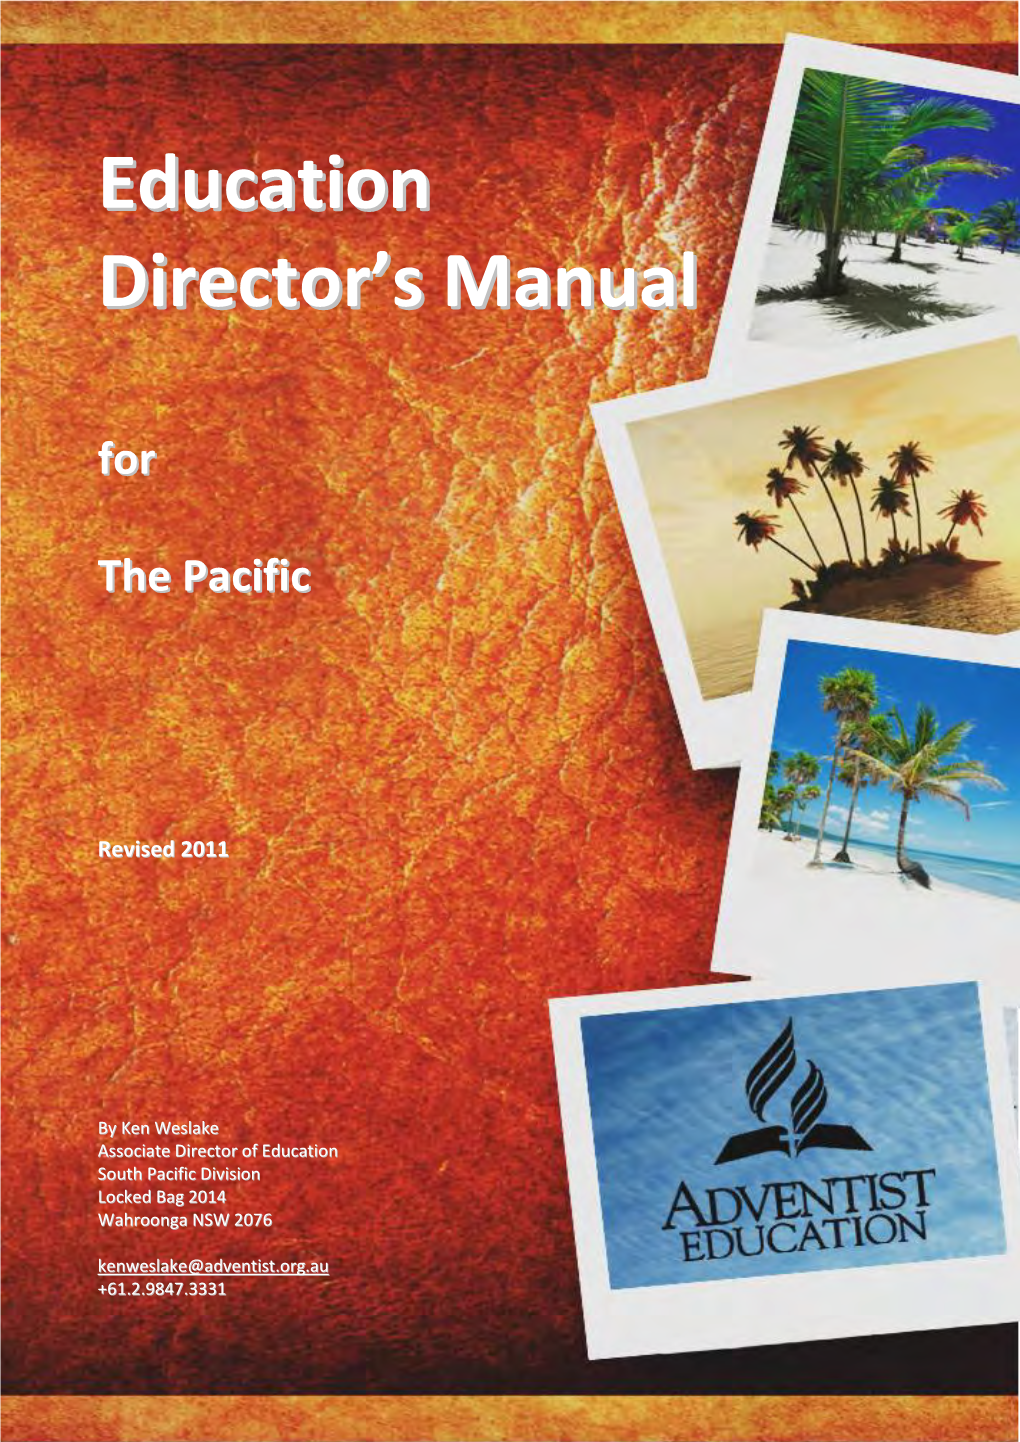 Education Director's Manual